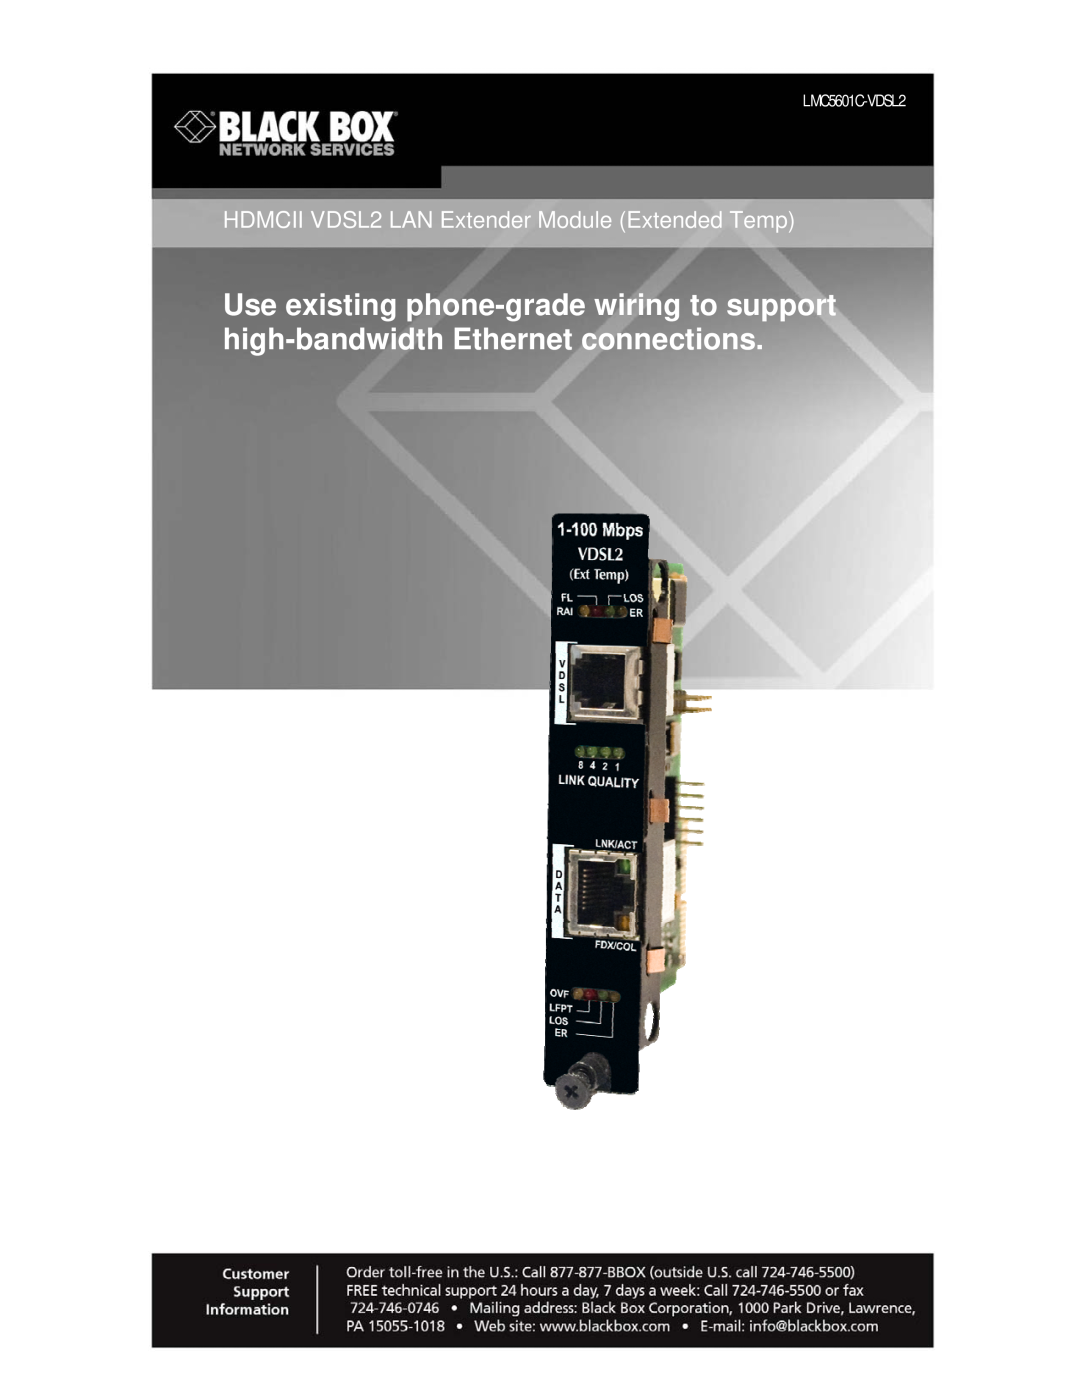 Black Box HDMCII VDSL2 LAN Extender Module (Extended Temp) manual HDMCII VDSL2 LAN Extender Module Extended Temp 